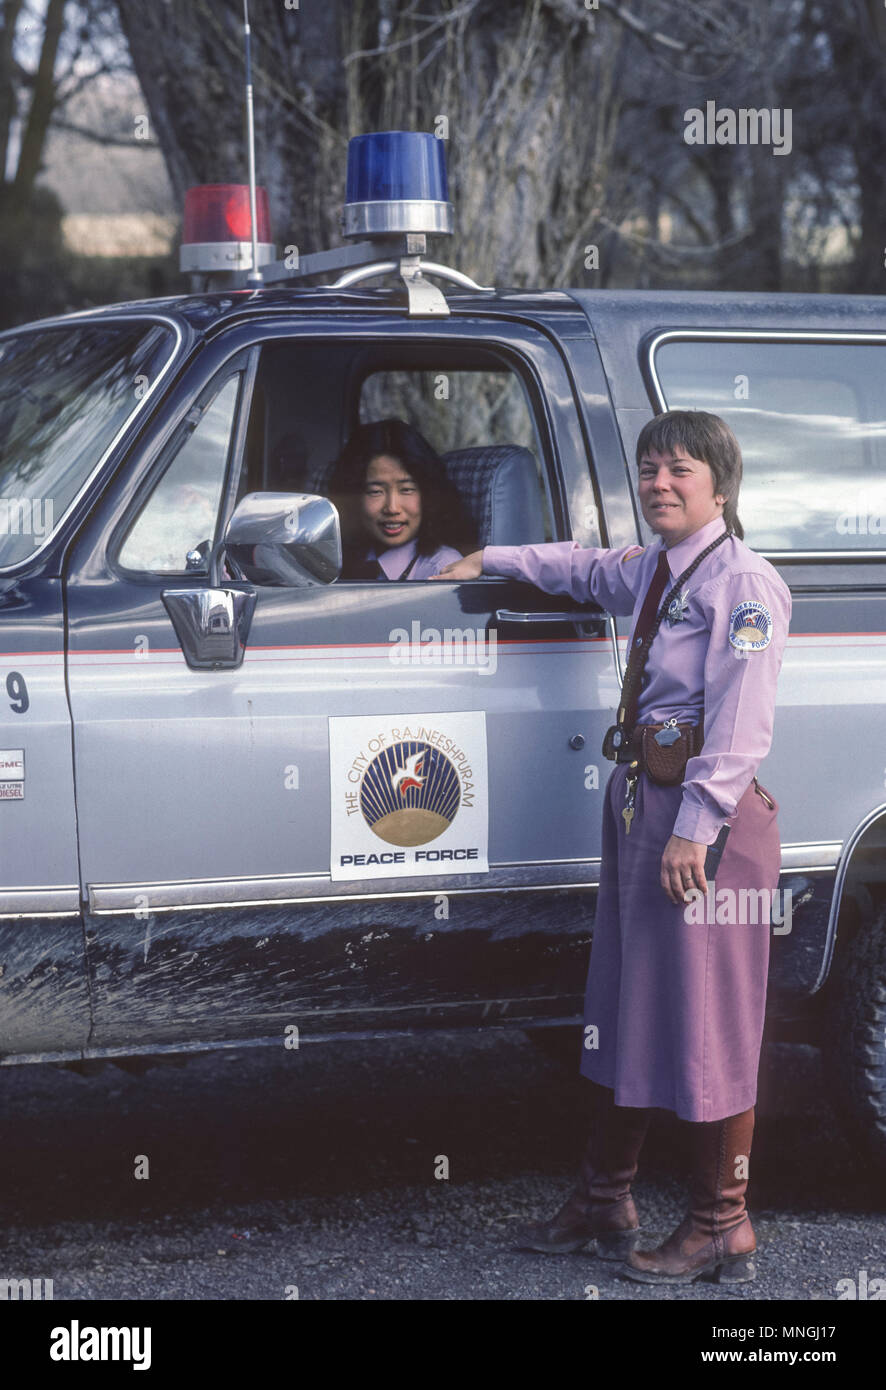 RAJNEESHPURAM, OREGON, USA - Rajneesh Peace Force, police at settlement of religious cult leader Bhagwan Shree Rajneesh in central Oregon. 1984 Stock Photo